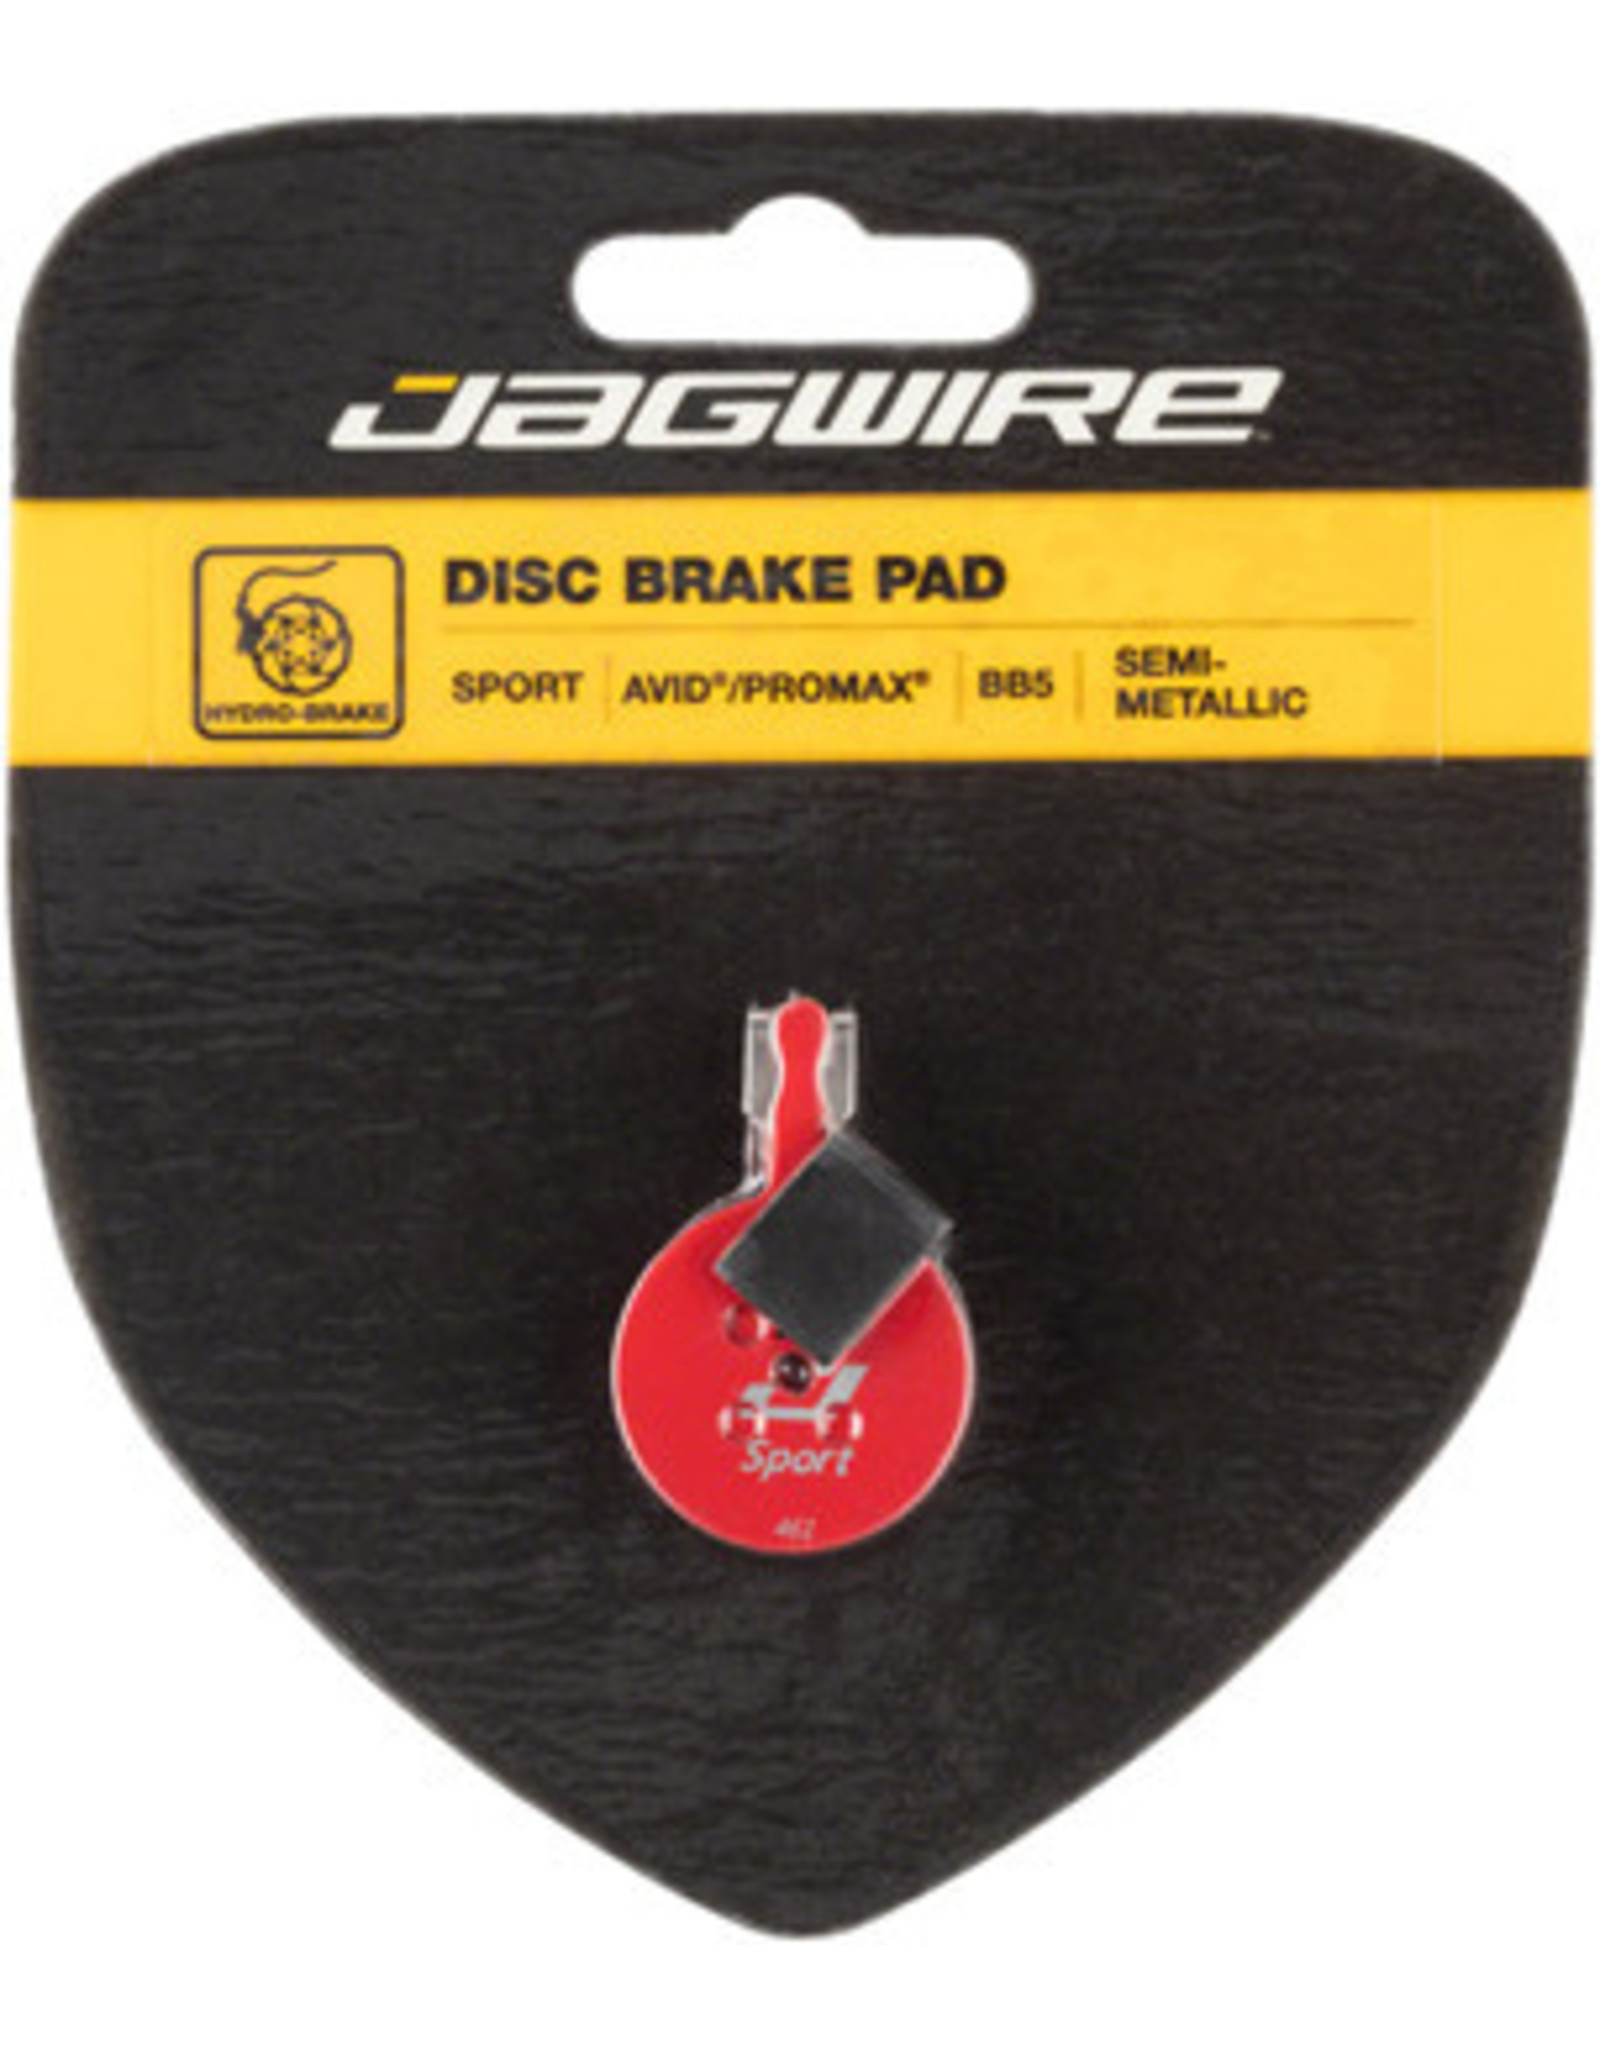 JAGWIRE Jagwire Mountain Sport Semi-Metallic Disc Brake Pads for Avid BB5, Promax